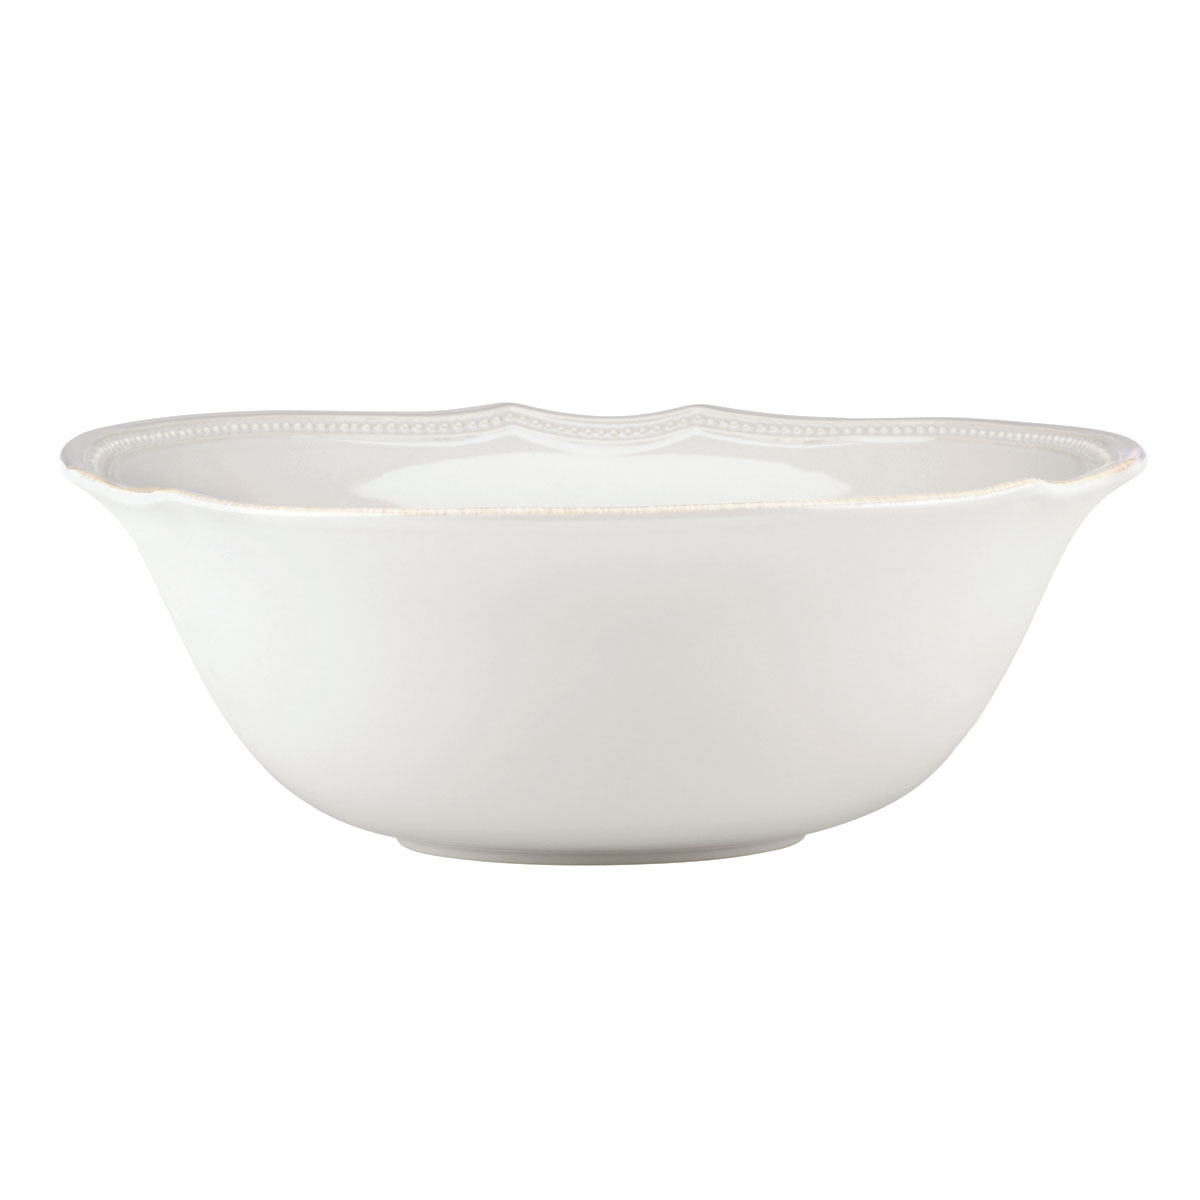 Lenox French Perle Bead White China Serving Bowl